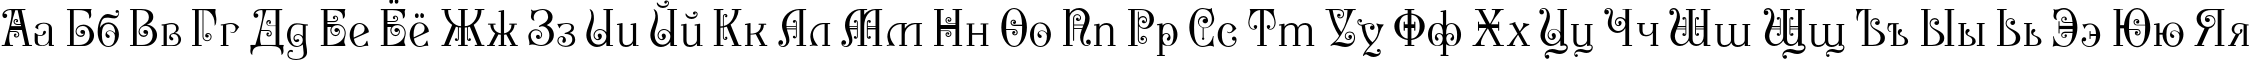 Пример написания русского алфавита шрифтом P22 Kilkenny Pro